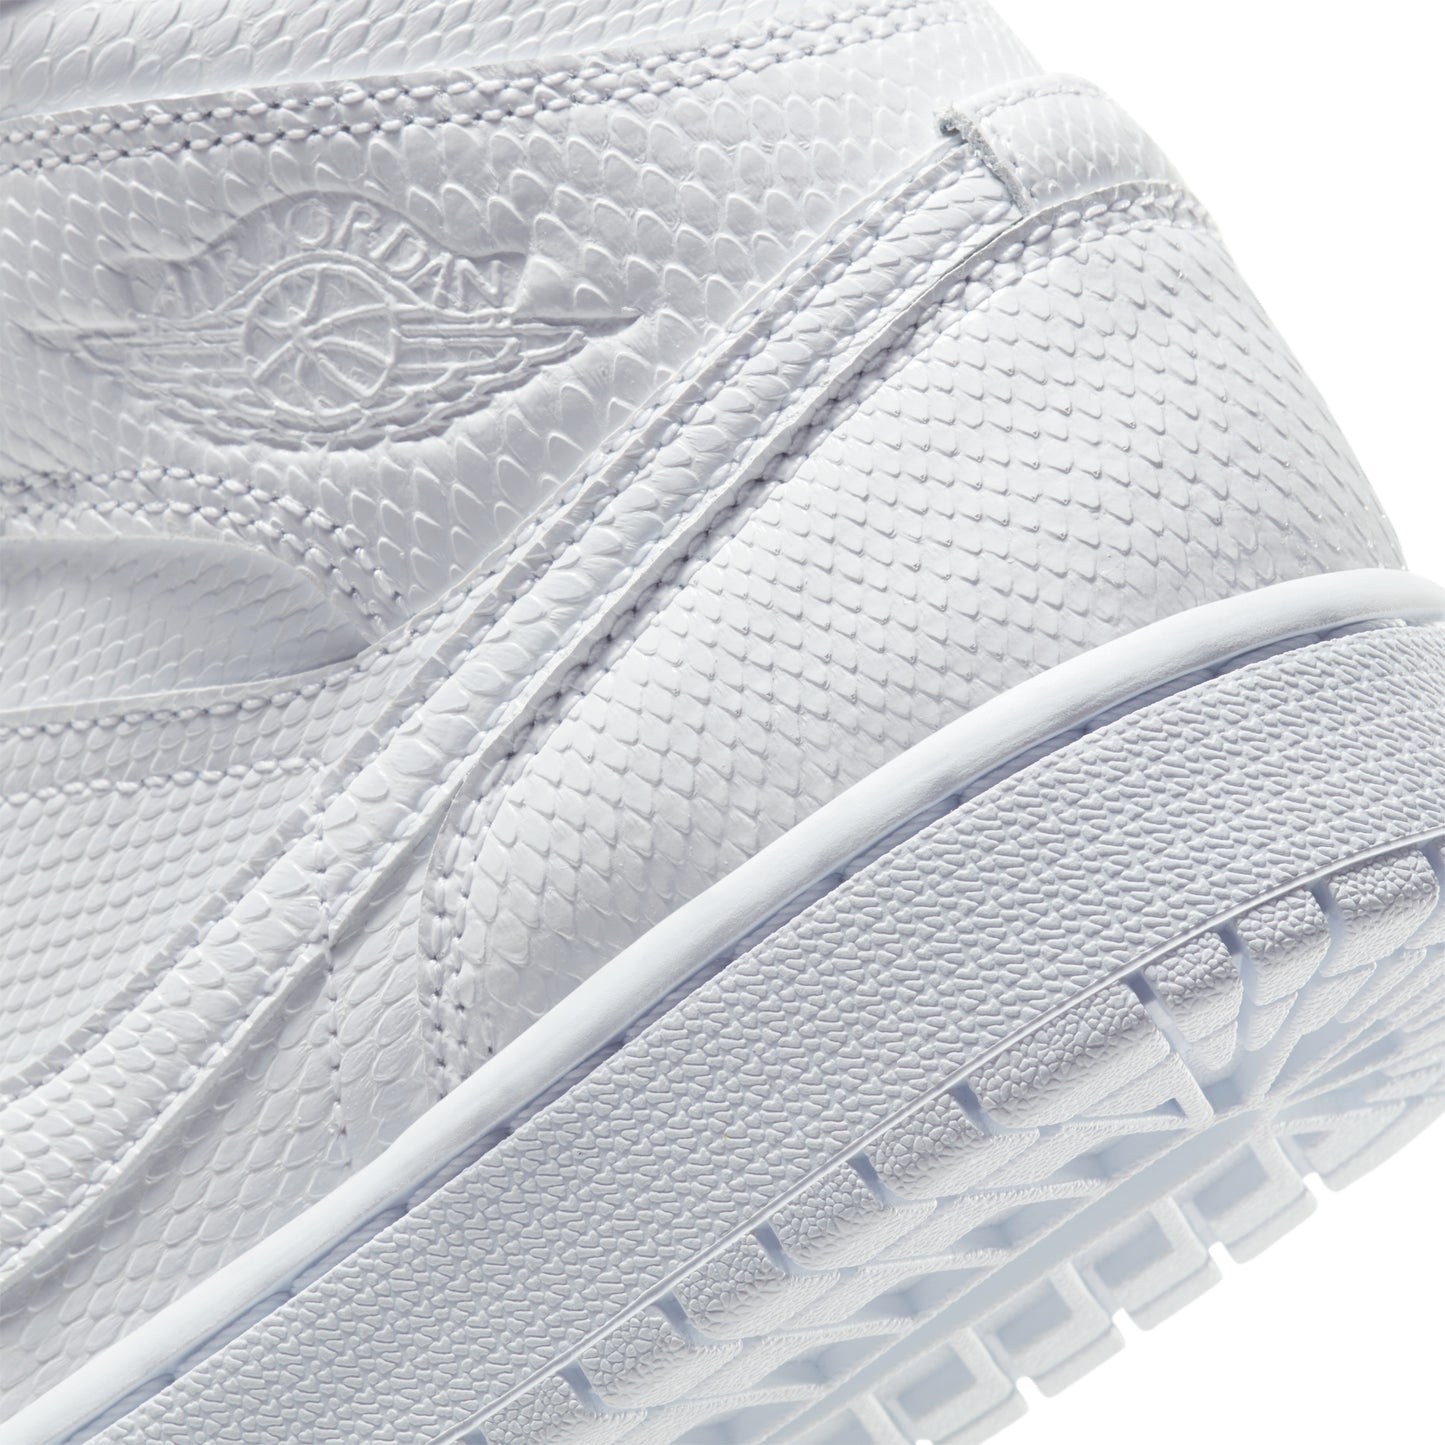 Nike Air Jordan 1 Mid White Snakeskin (W)